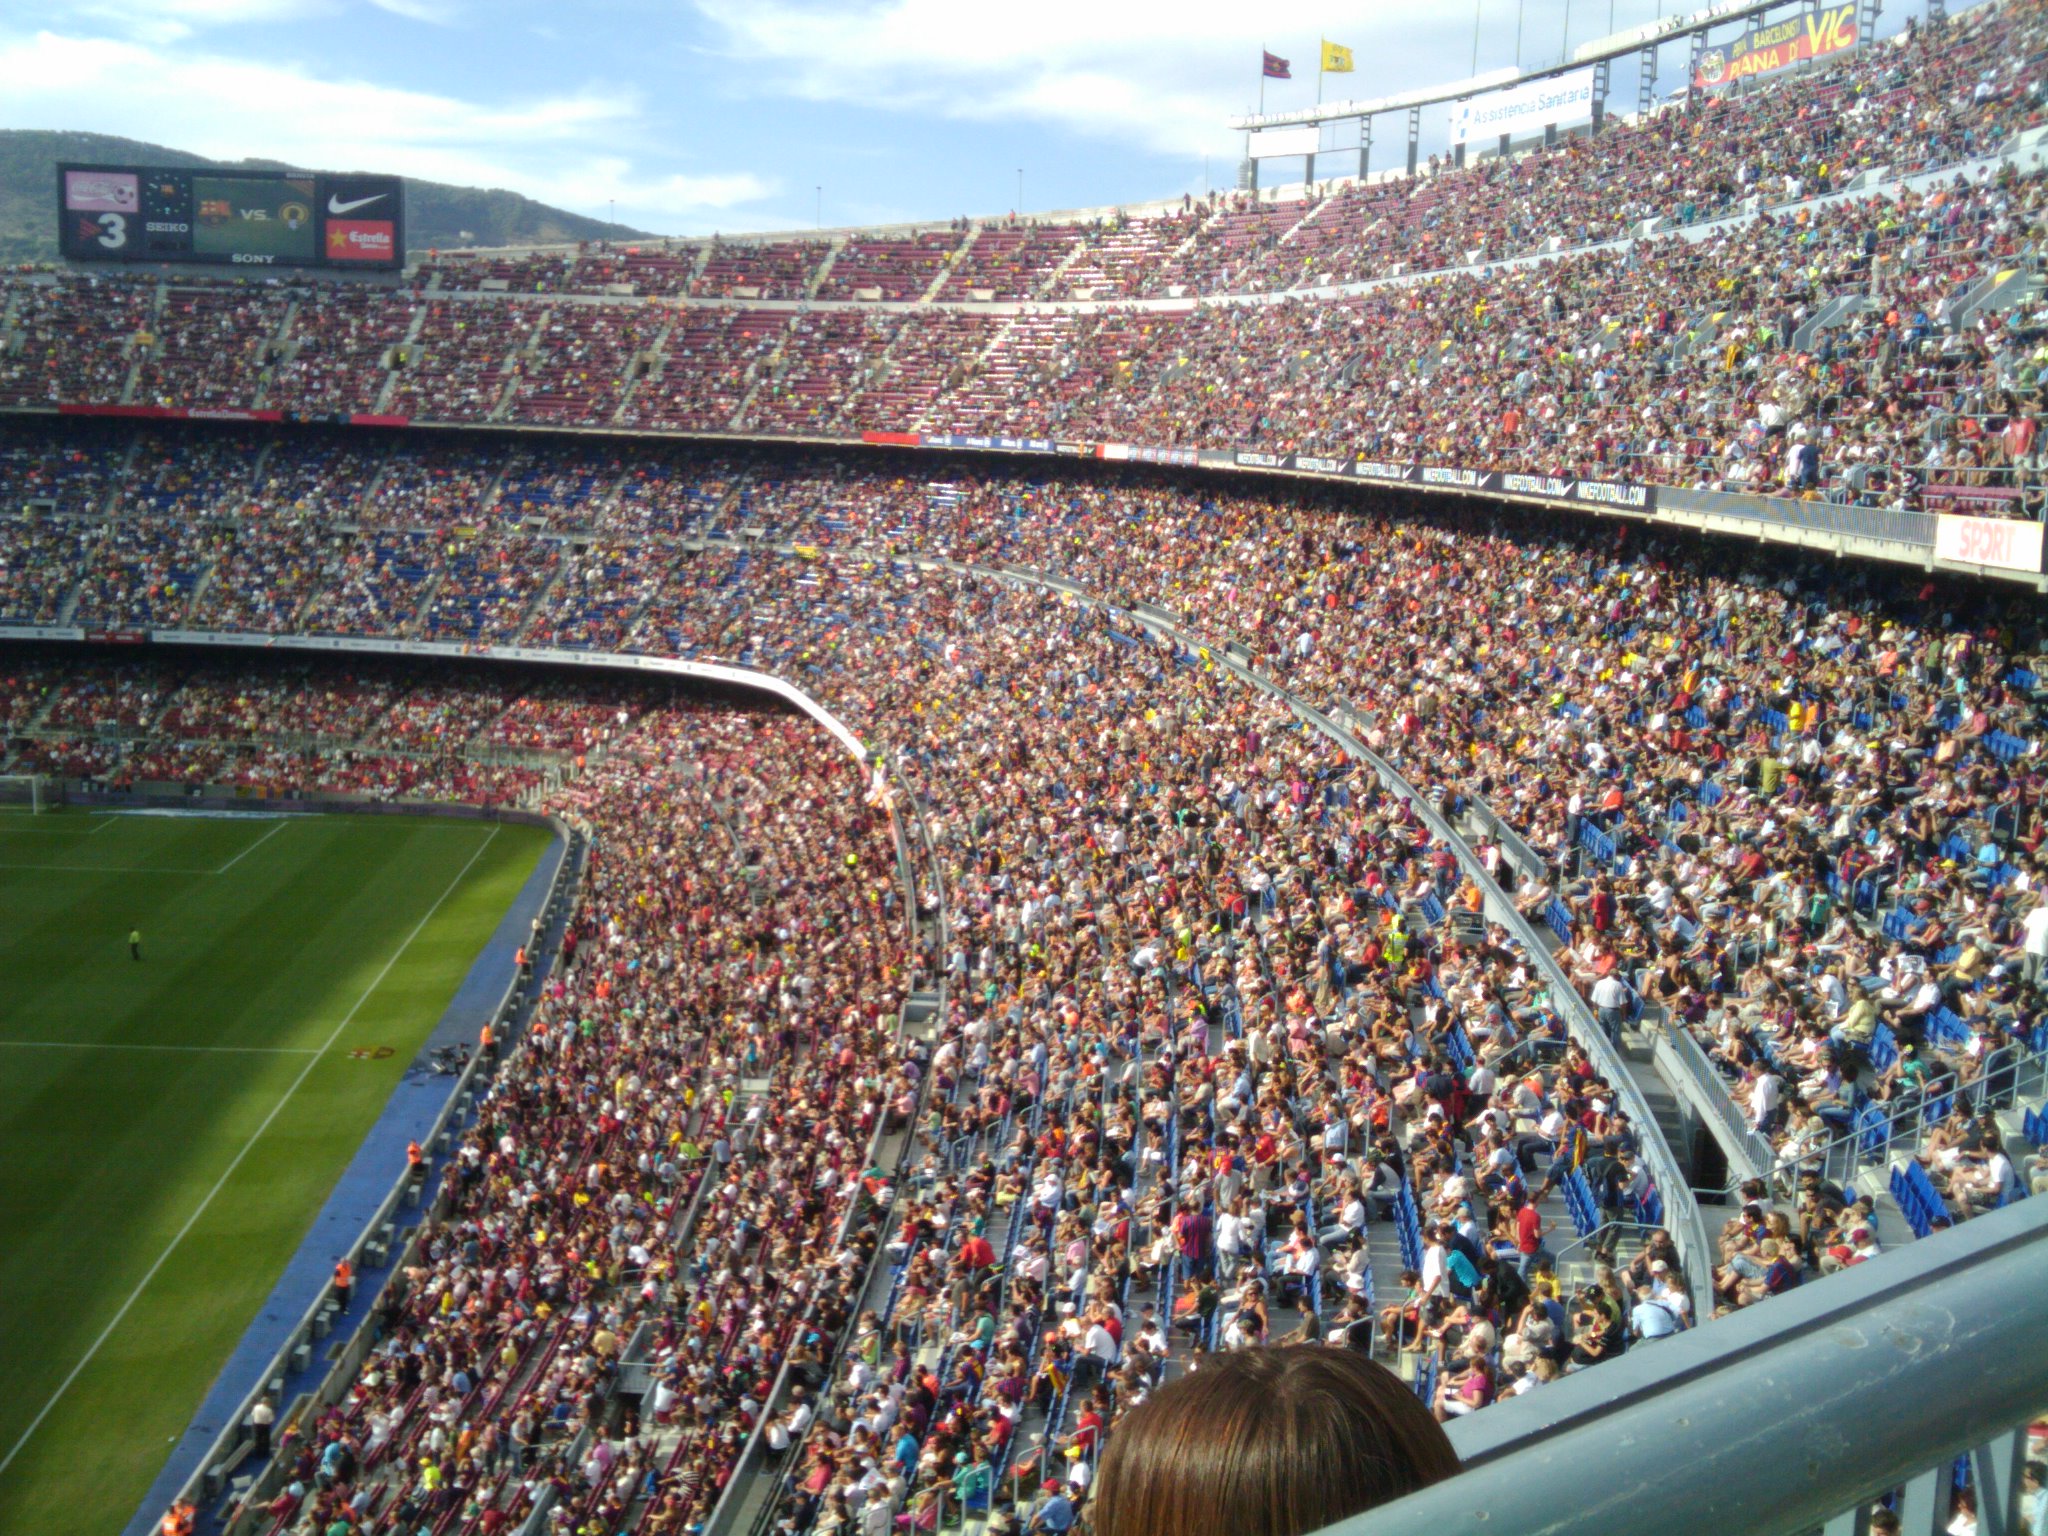 Stadium Crowd